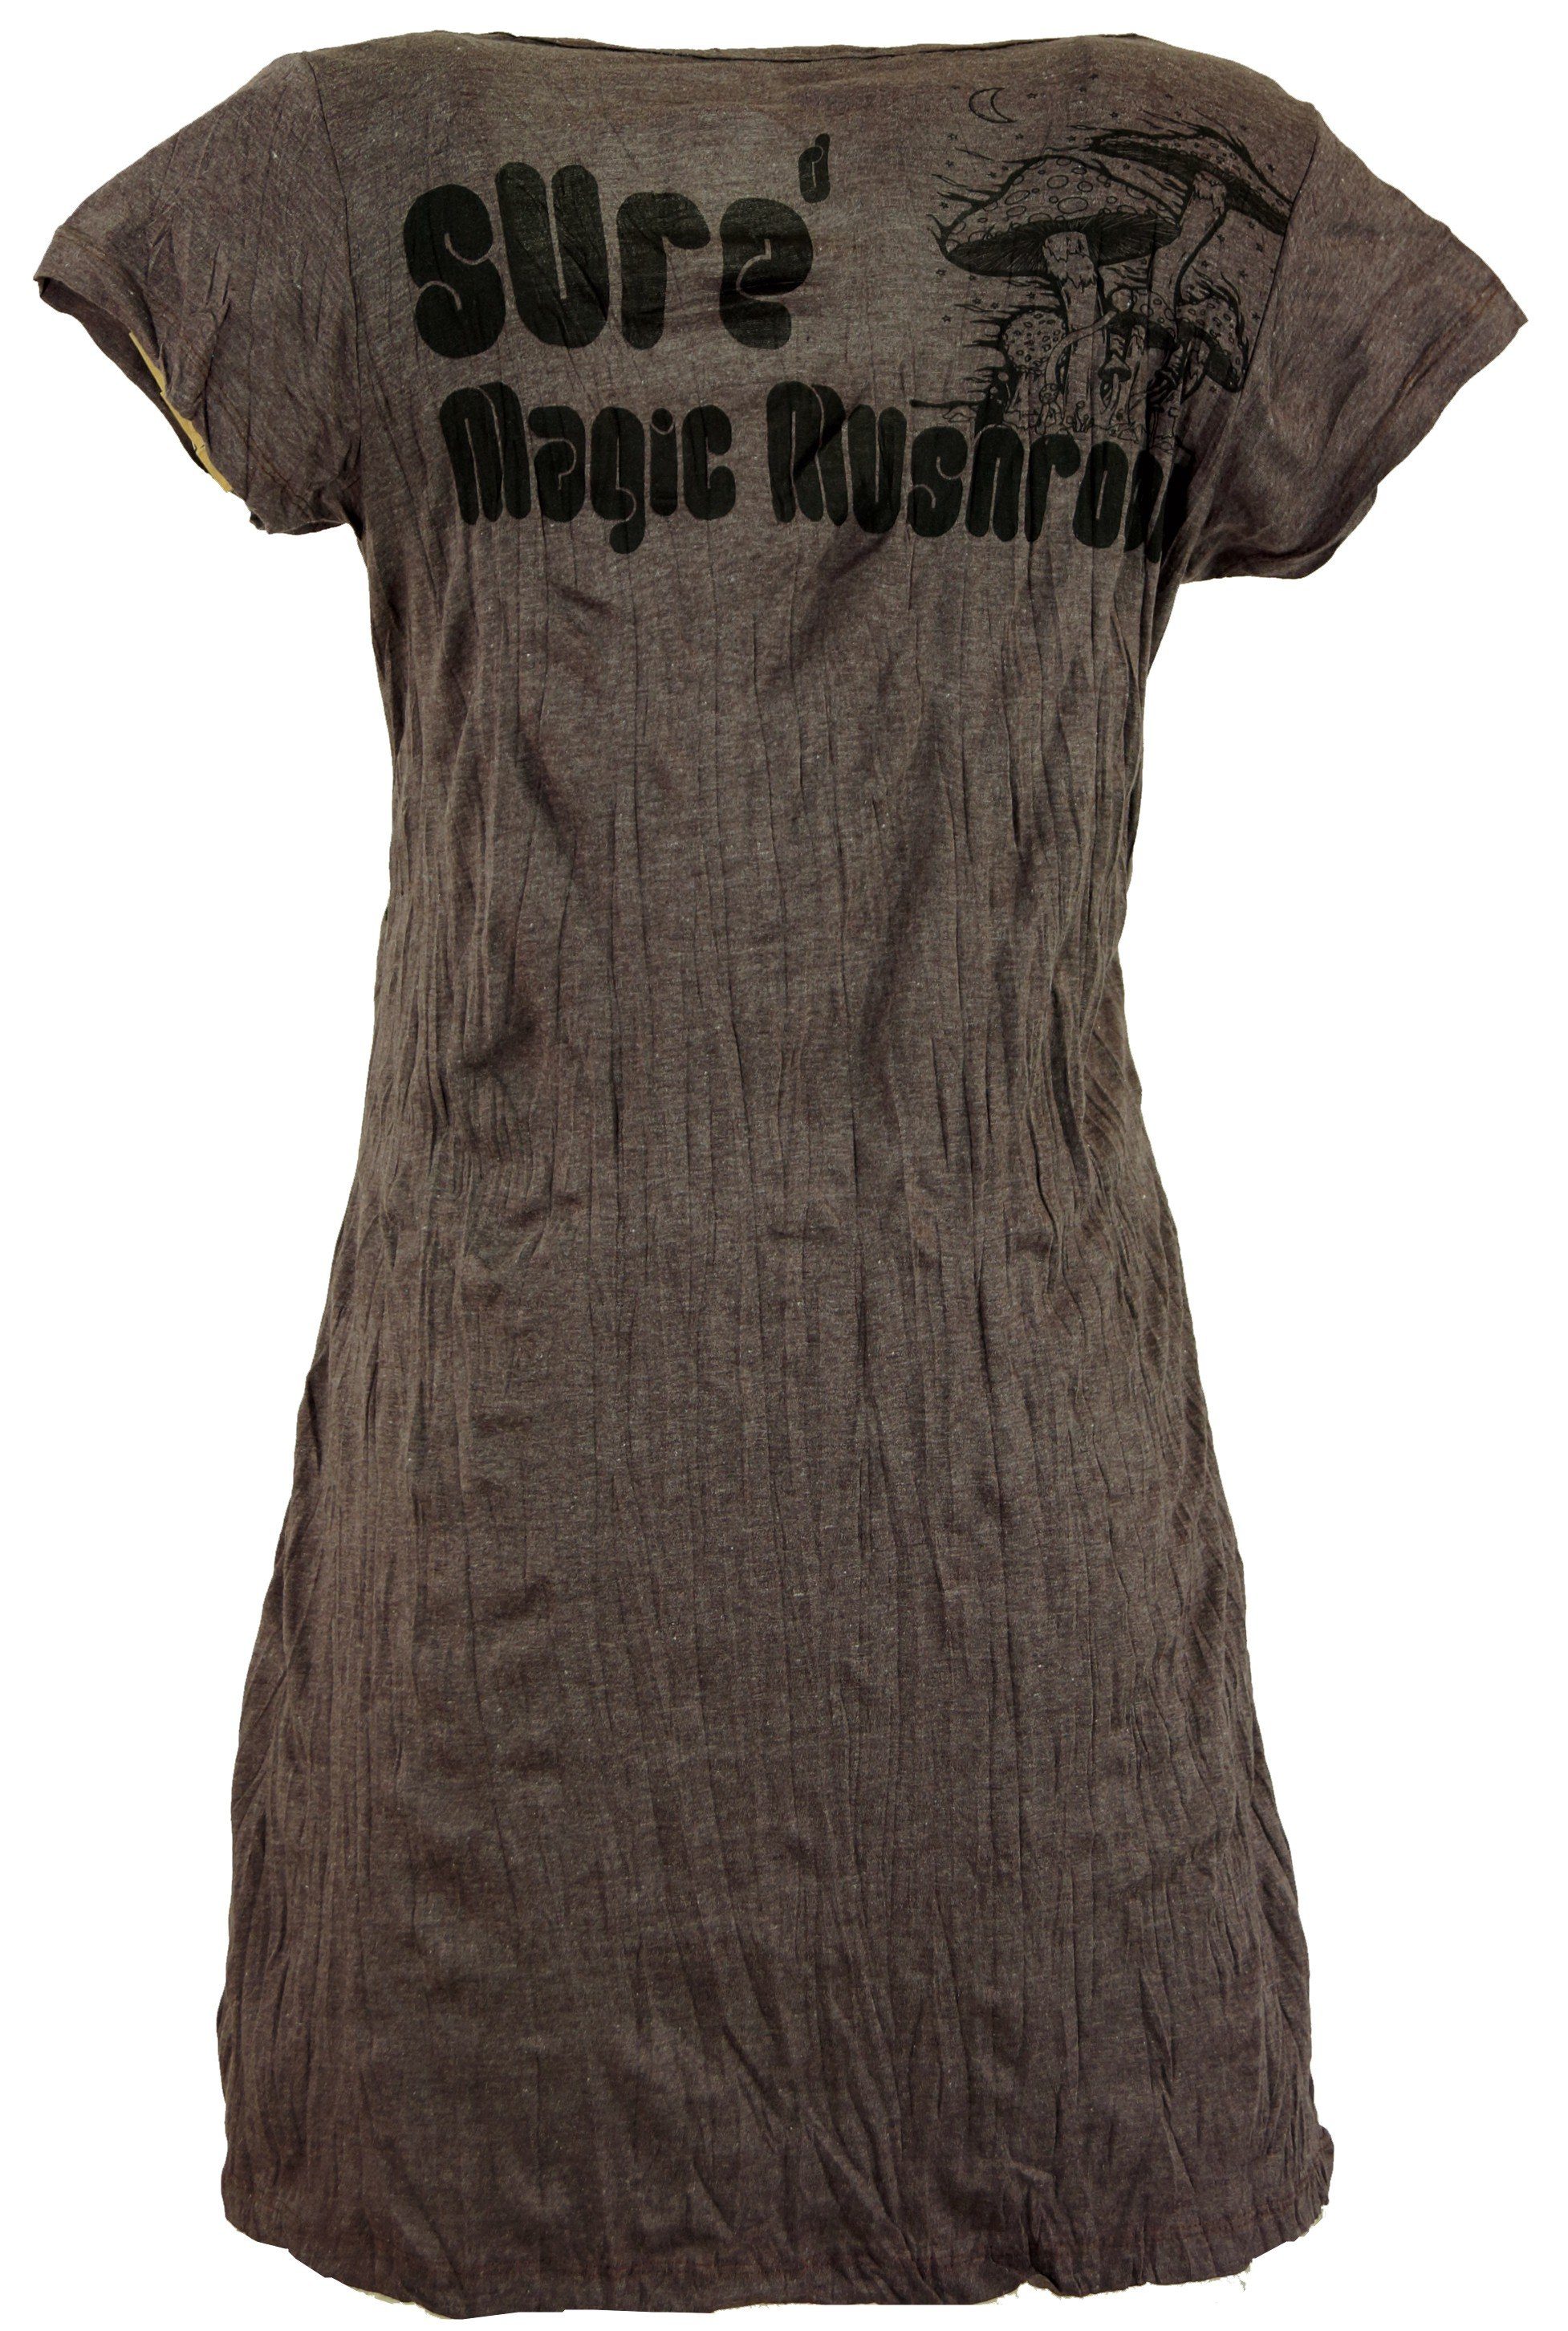 Minikleid Mushroom Sure - Bekleidung Style, Magic alternative taupe T-Shirt Festival, Guru-Shop Long Shirt, Goa